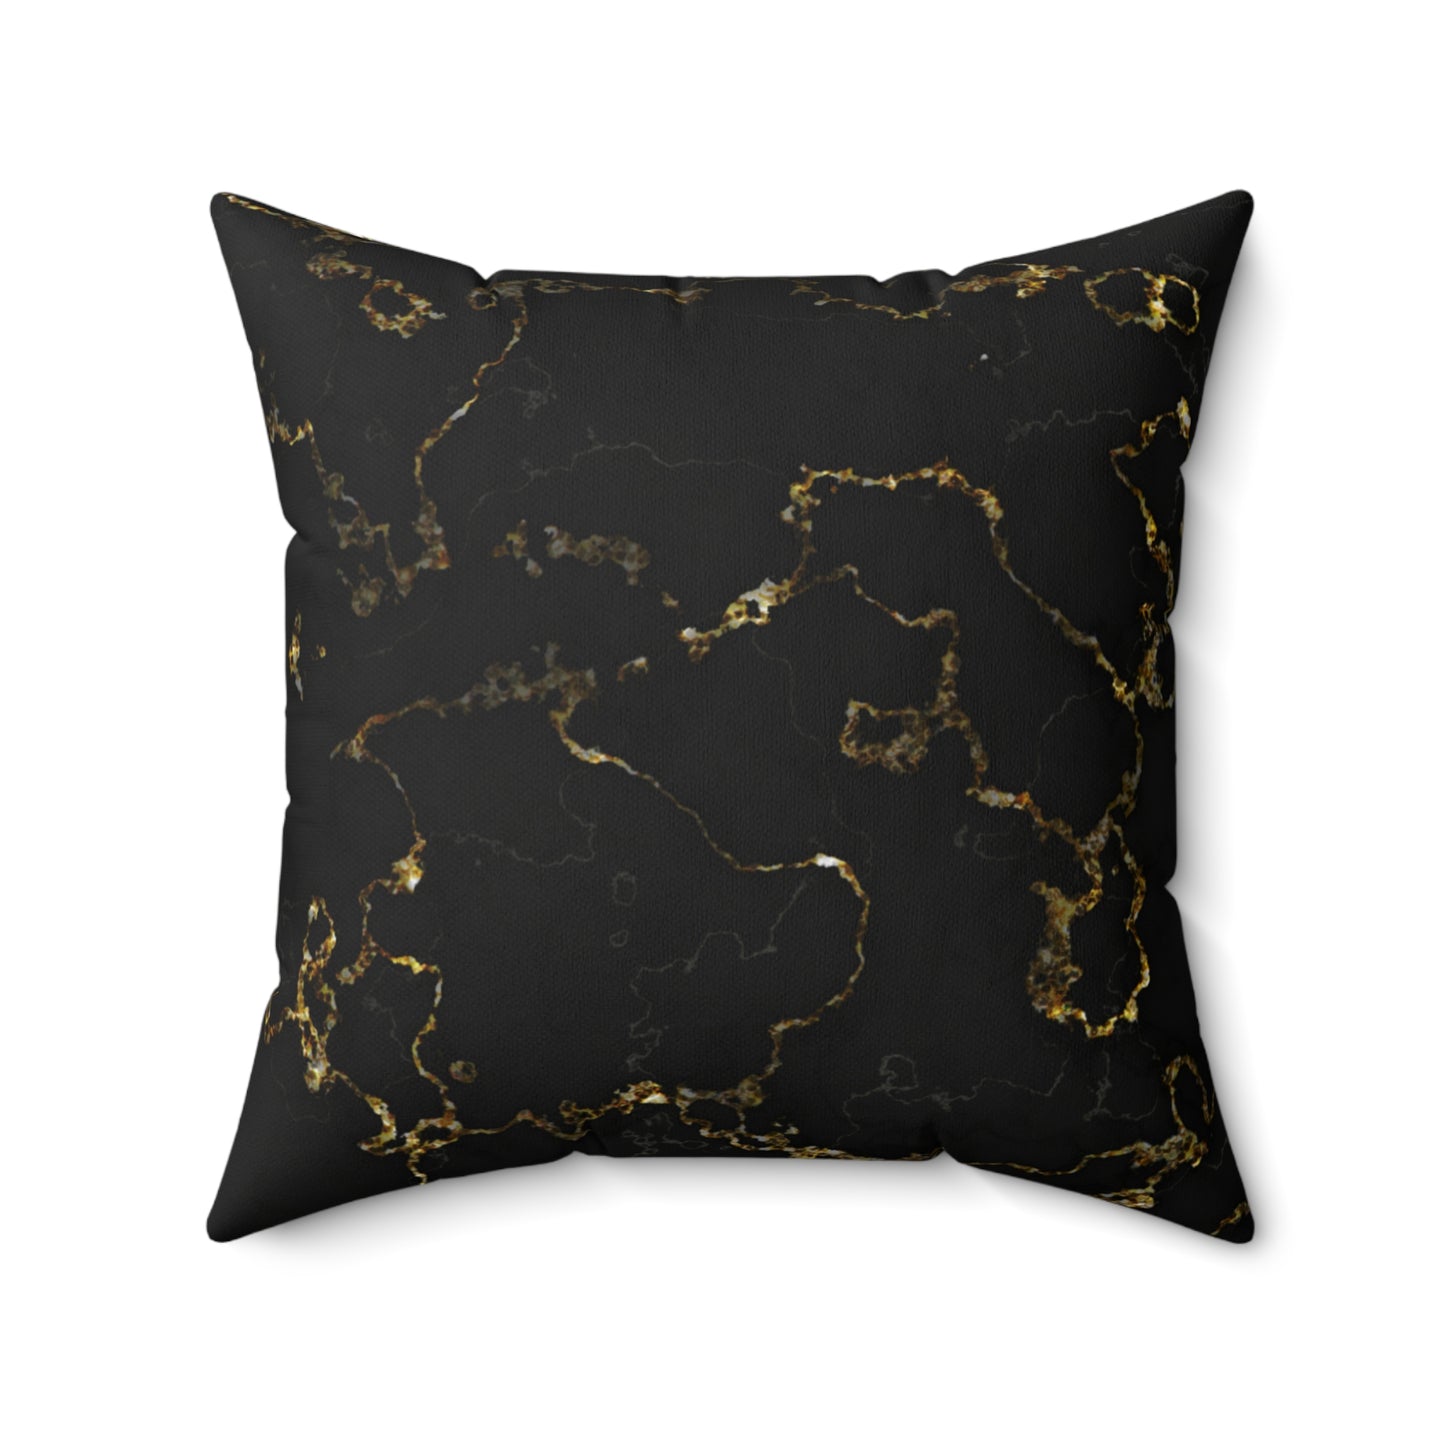 Neferkitti Black Kitty Cat Pharaoh Gold & Black Square Pillow Multiple Sizes